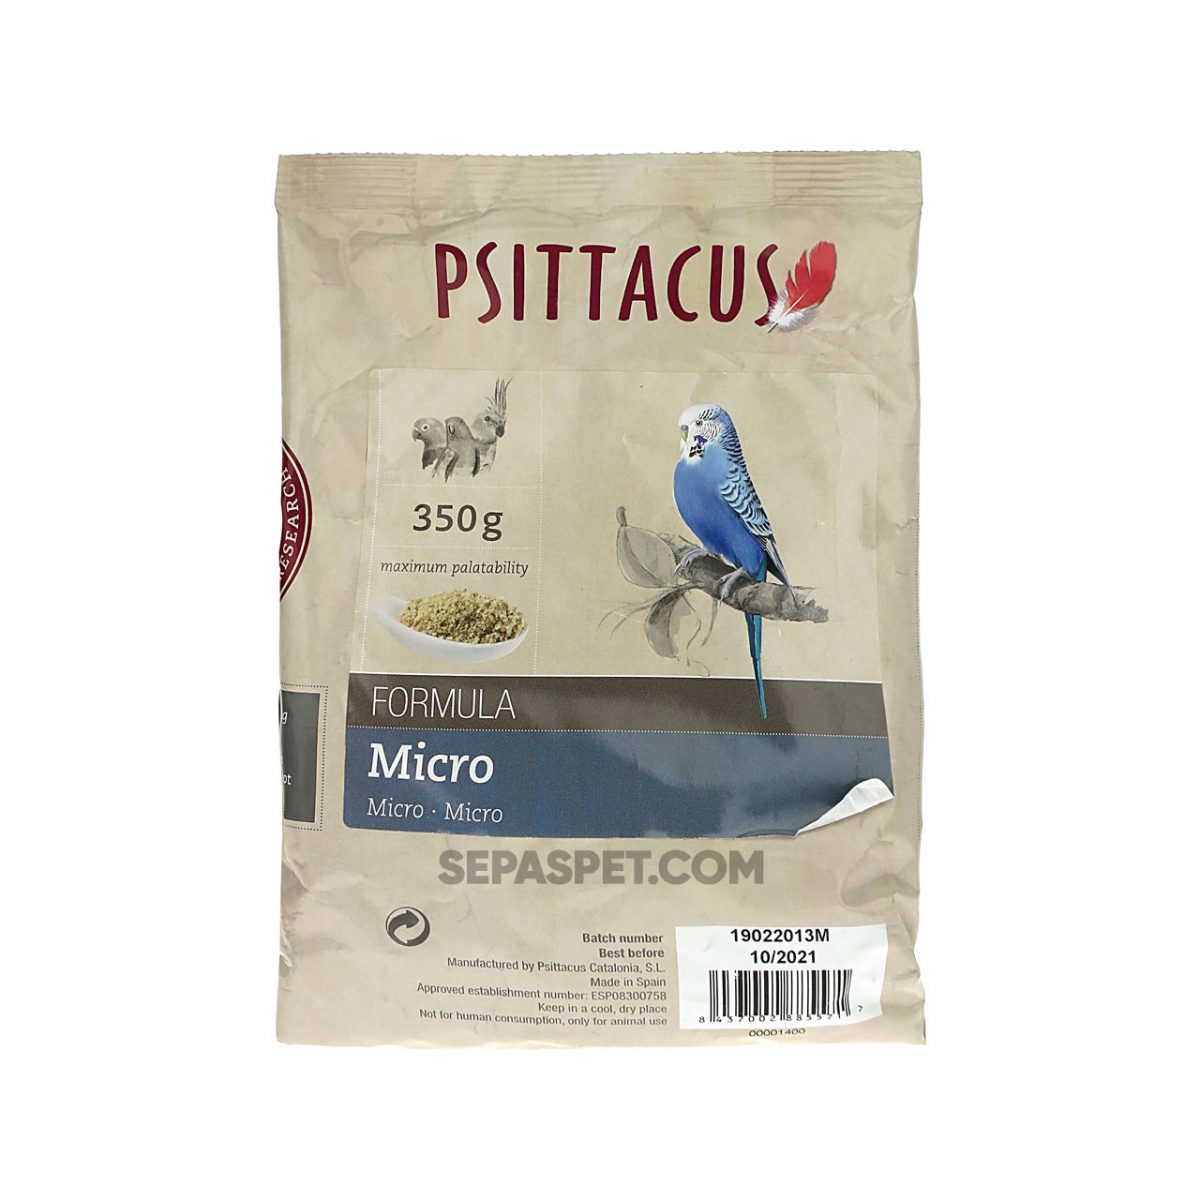 پلت-میکرو-سیتاکوس-350-گرمی-micro-psittacus-350-gr